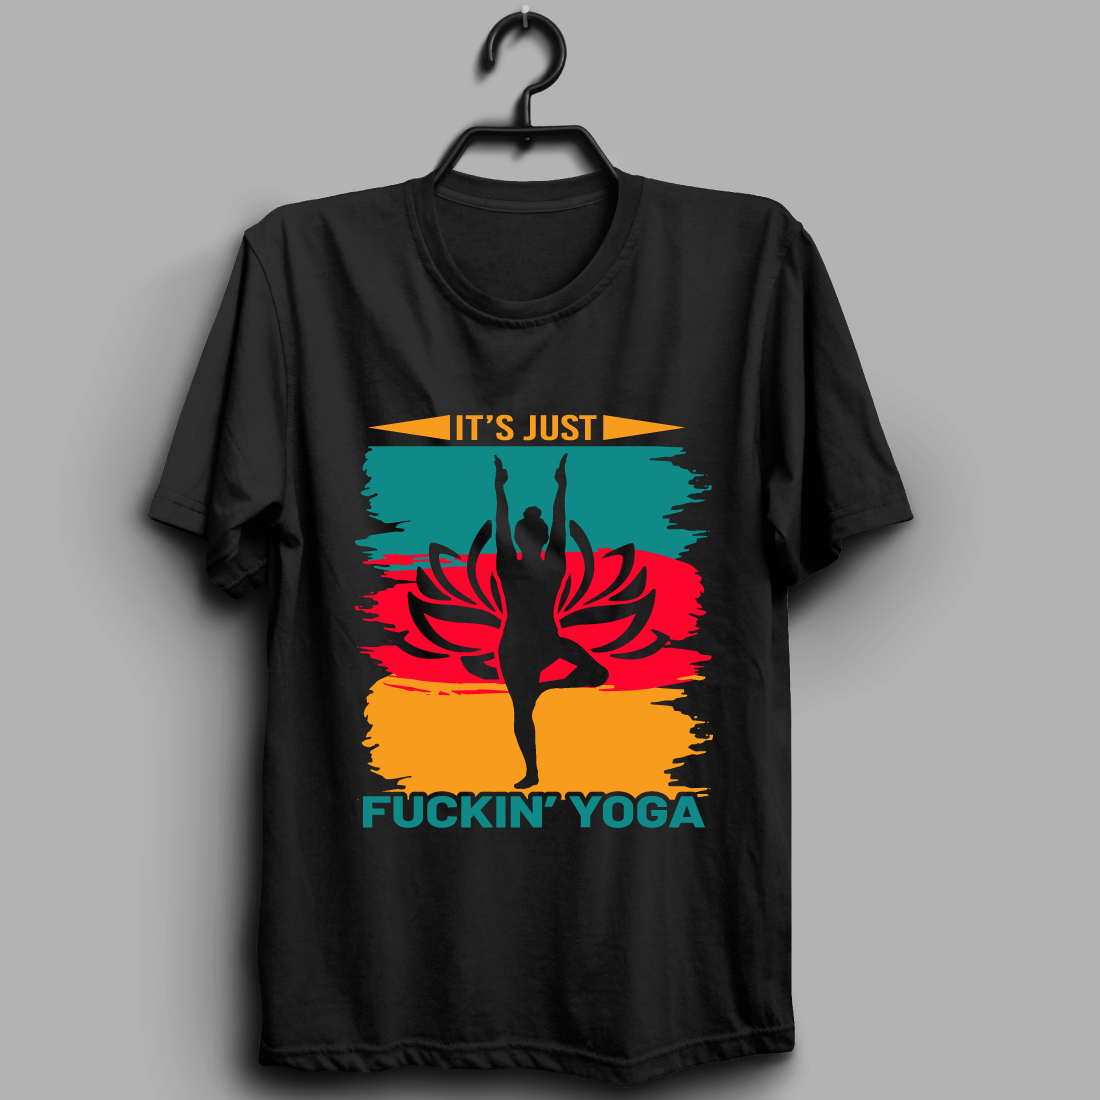 yoga t shirt design 4 135